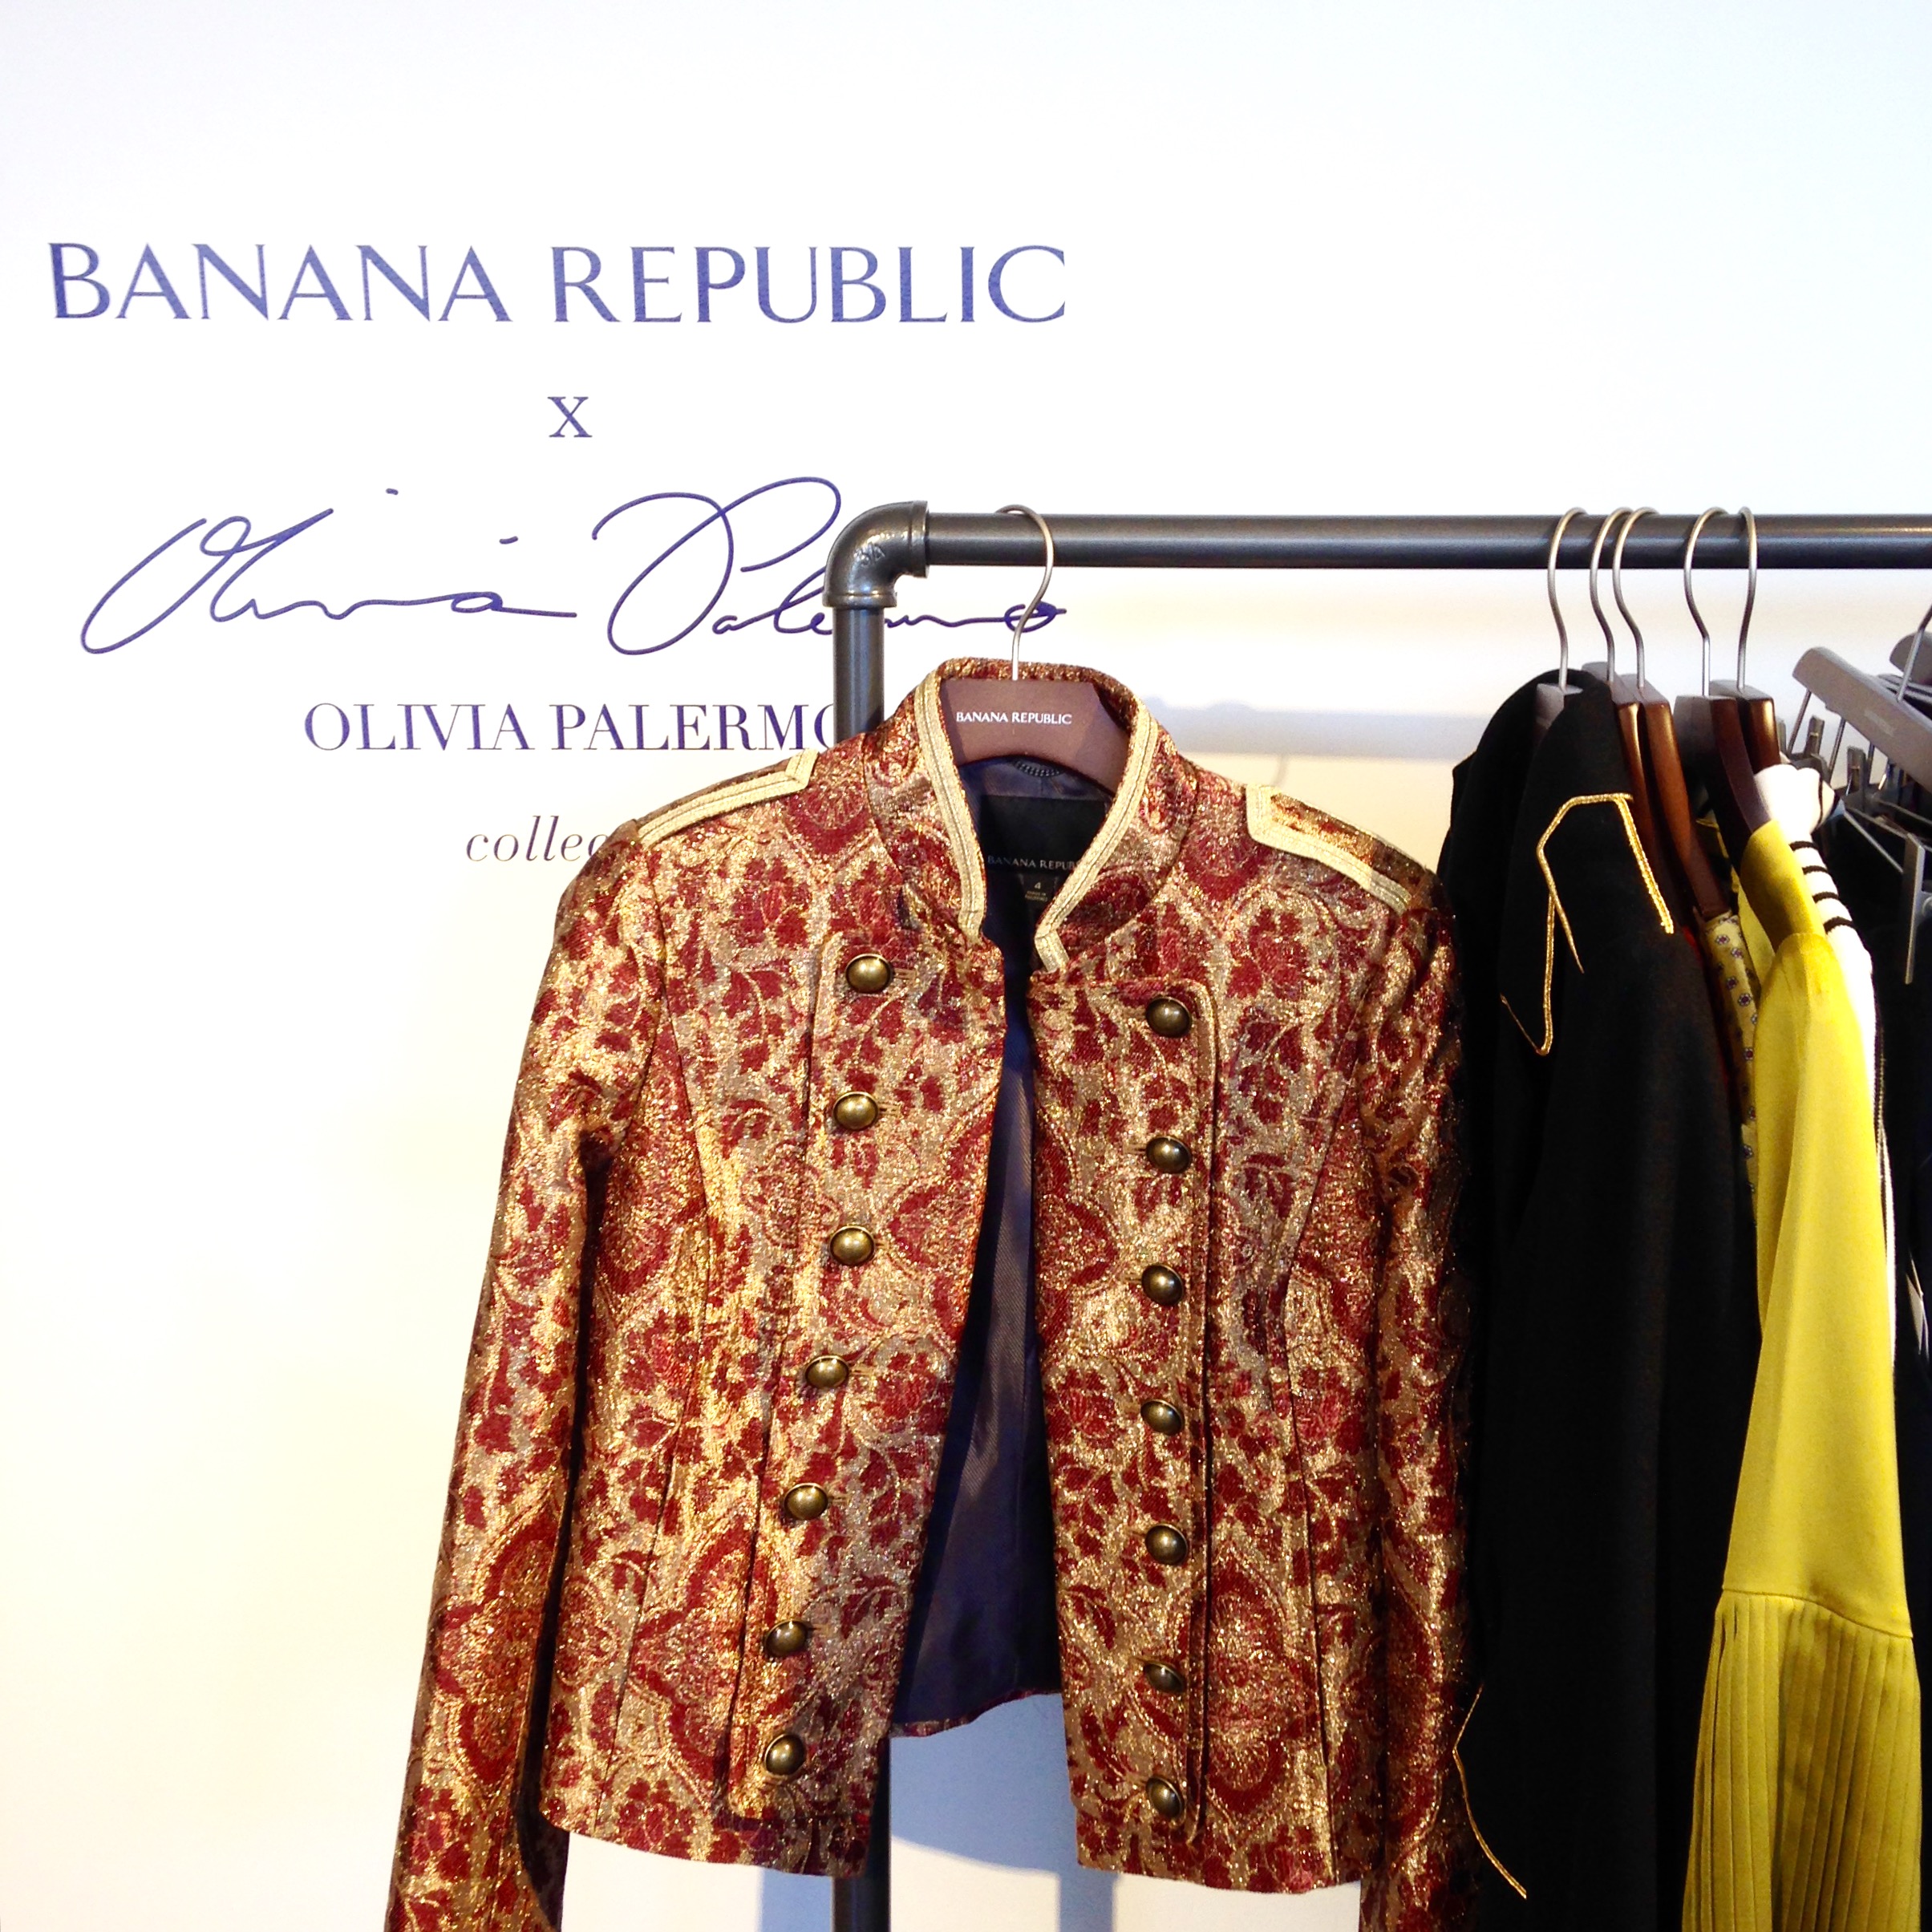 Collection Banana Republic x Olivia Palermo: on aime TOUT!